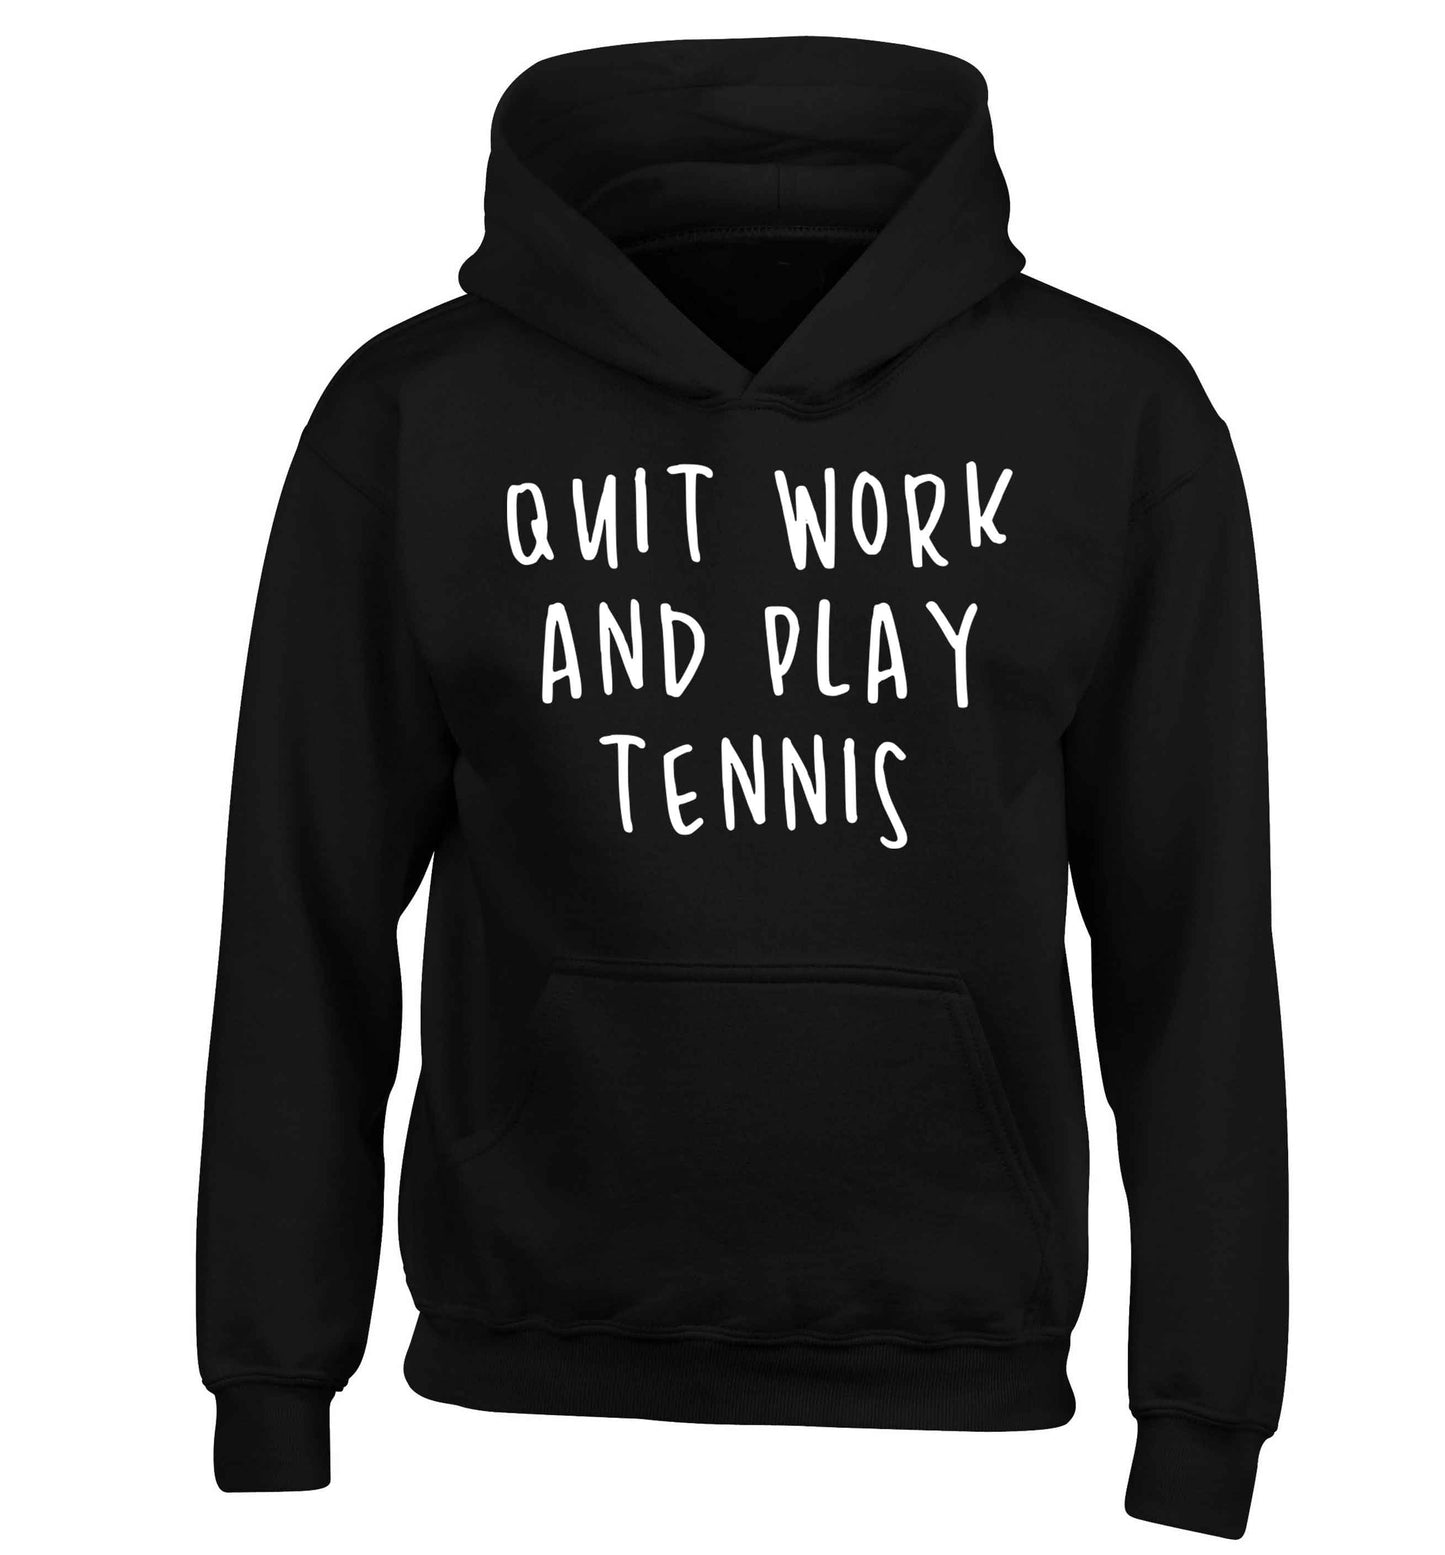 Quit work and play tennis children's black hoodie 12-13 Years